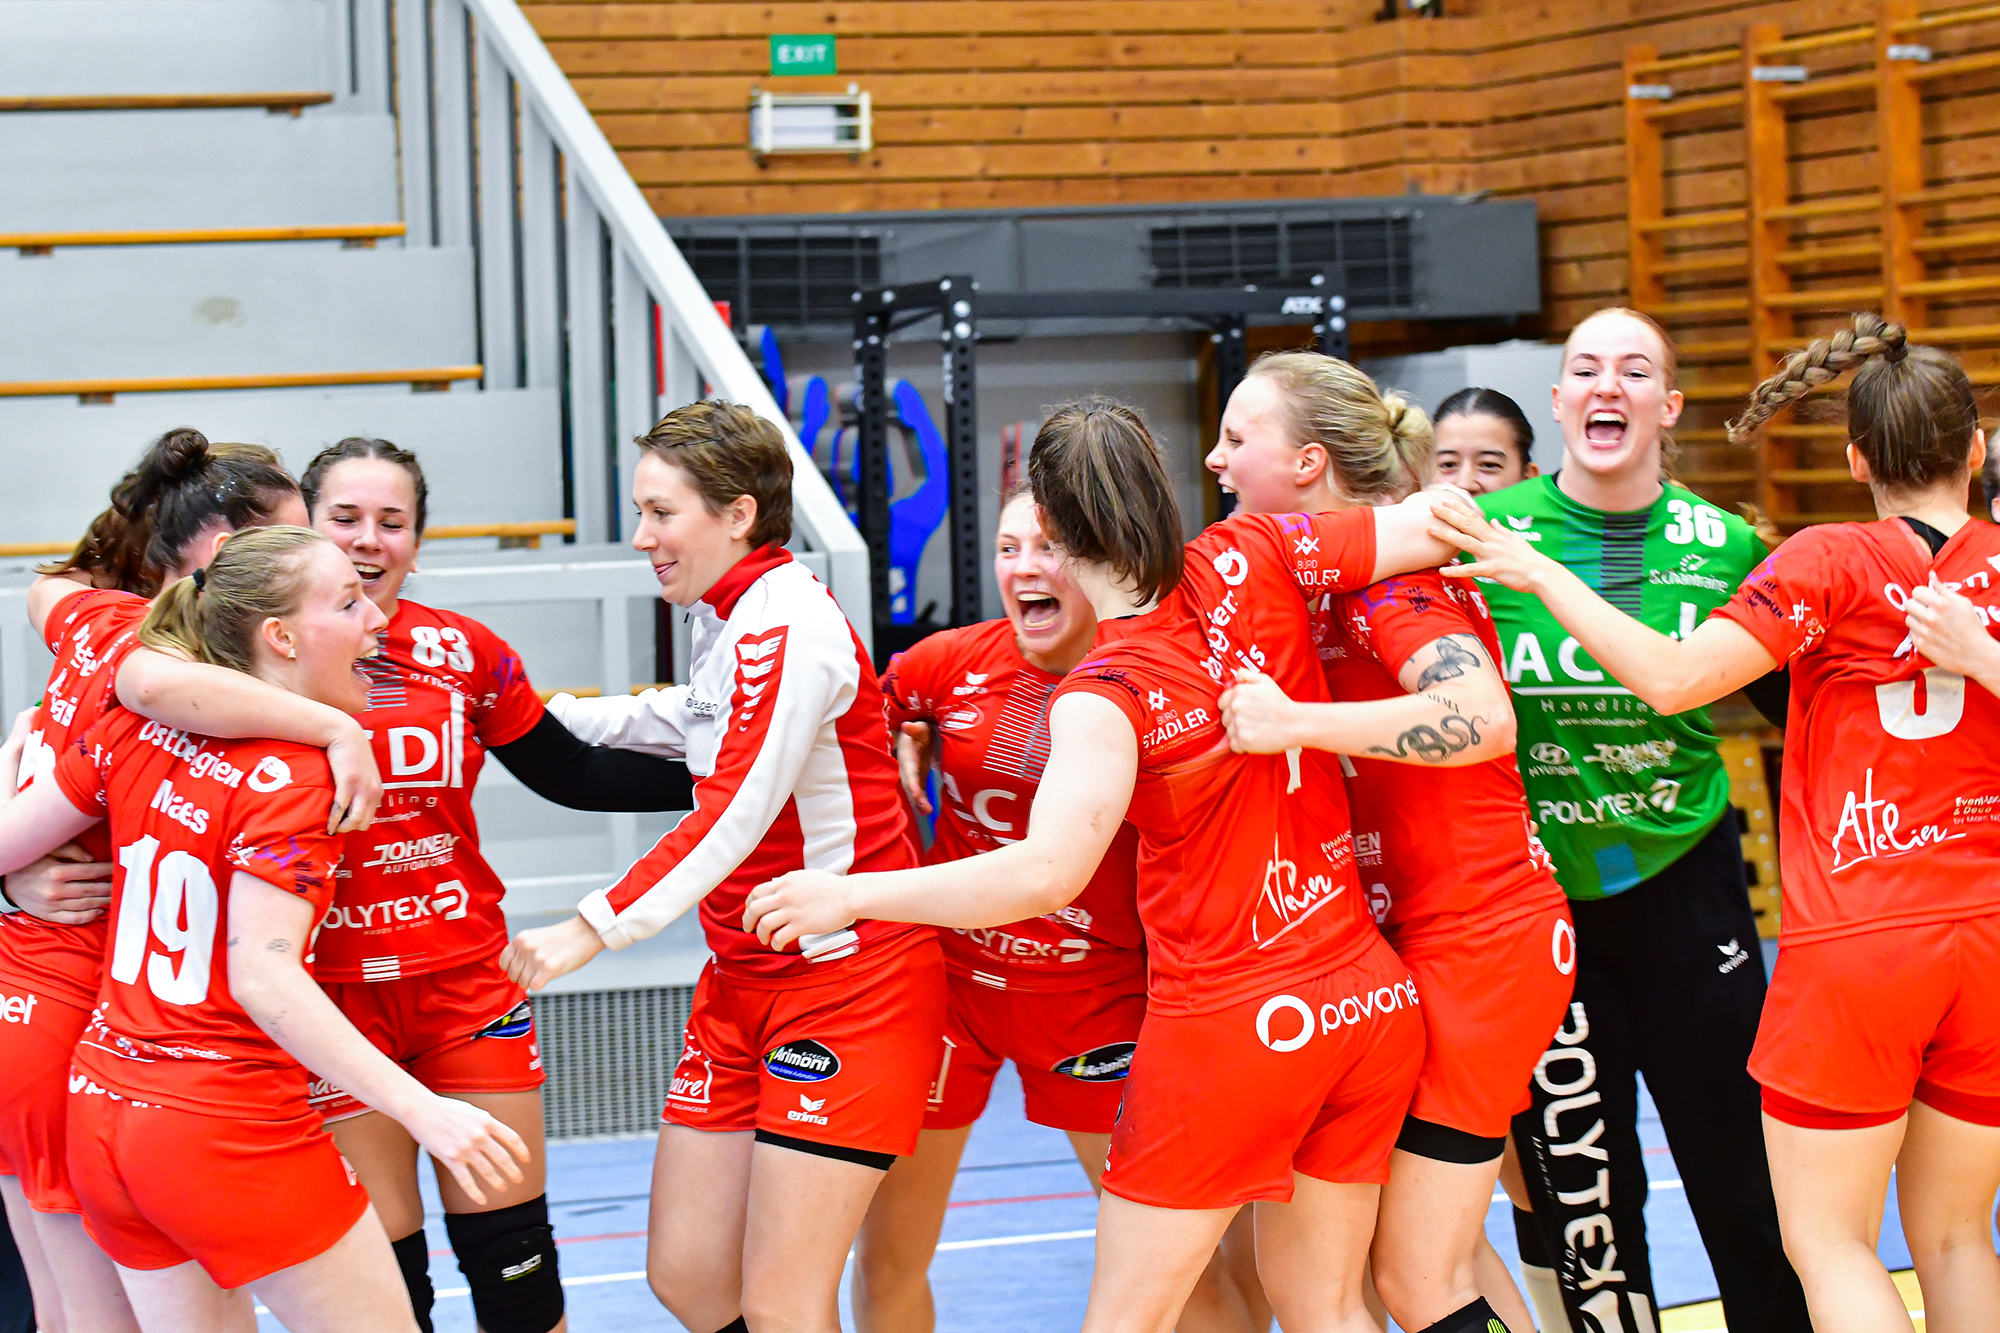 KTSV-Damen gewinnen Spitzenspiel gegen Sint-Truiden (Bild: Bernd Rosskamp)